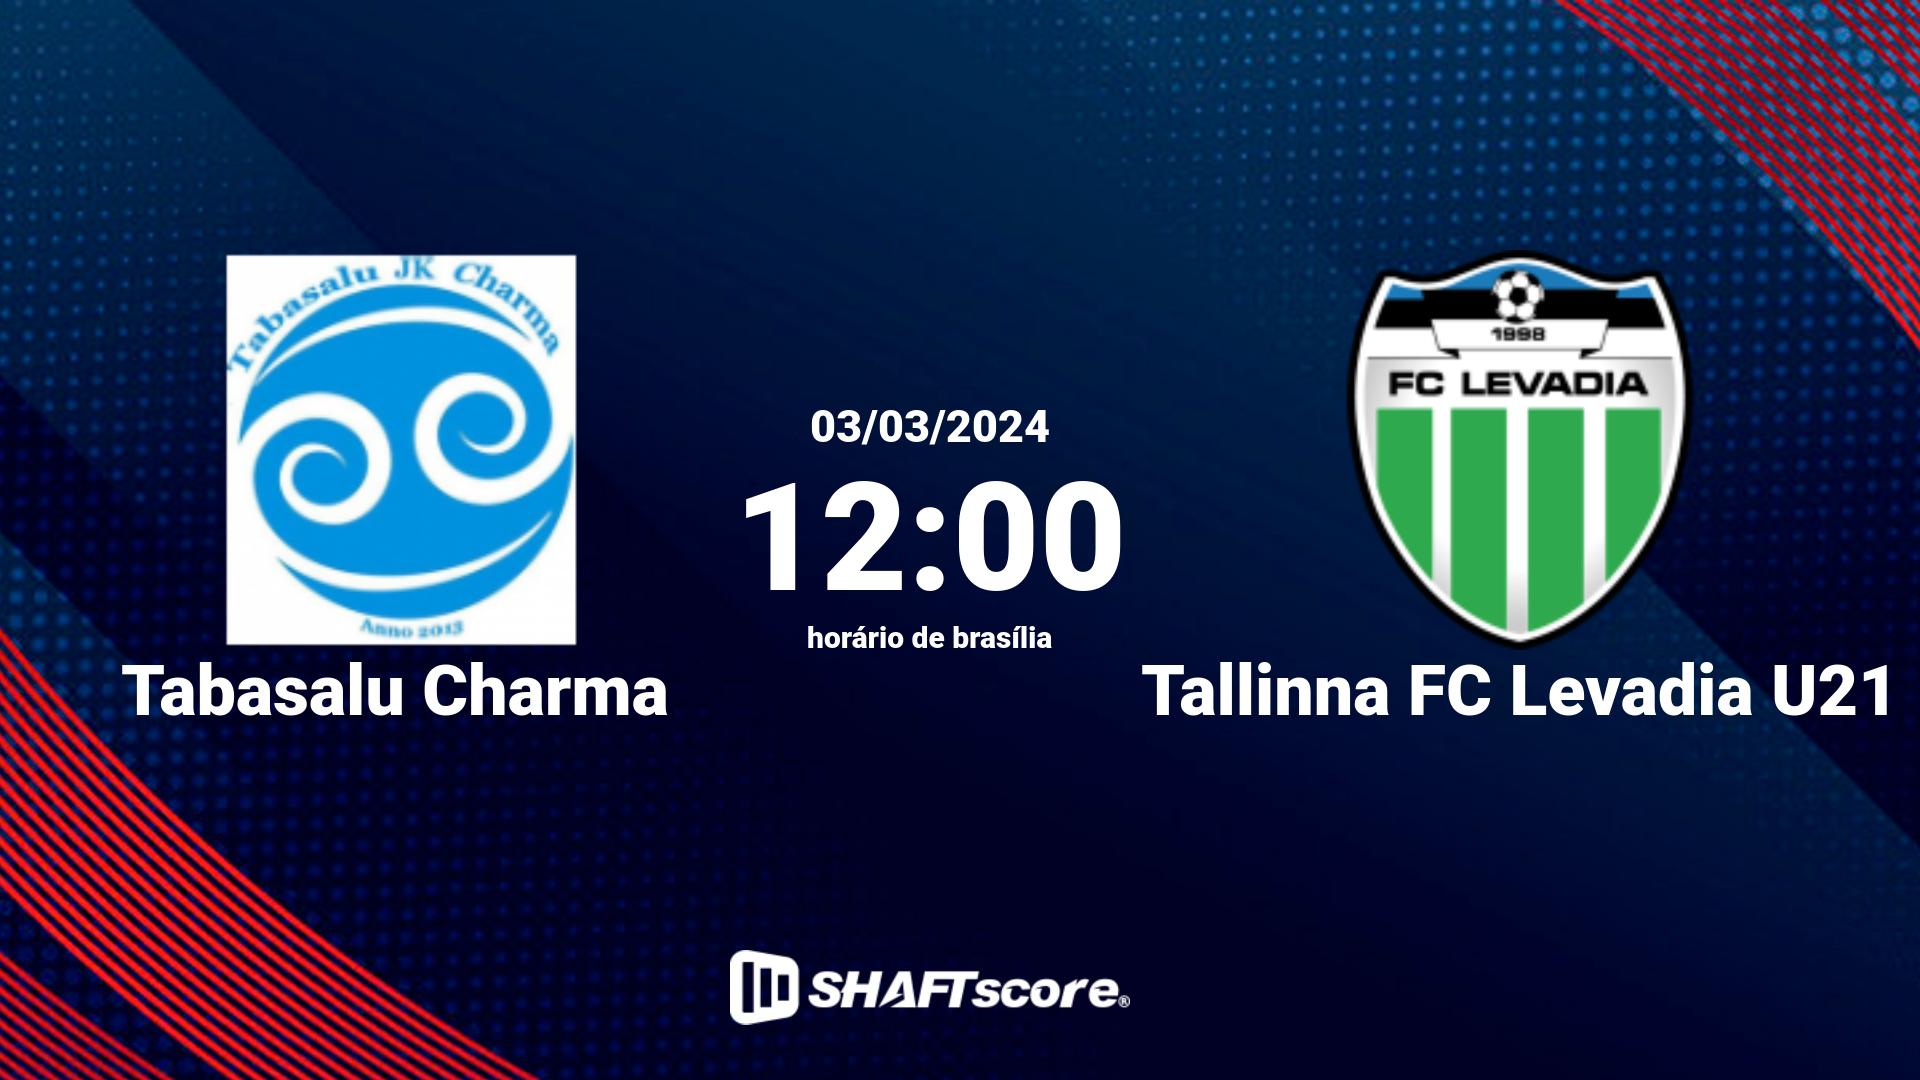 Estatísticas do jogo Tabasalu Charma vs Tallinna FC Levadia U21 03.03 12:00